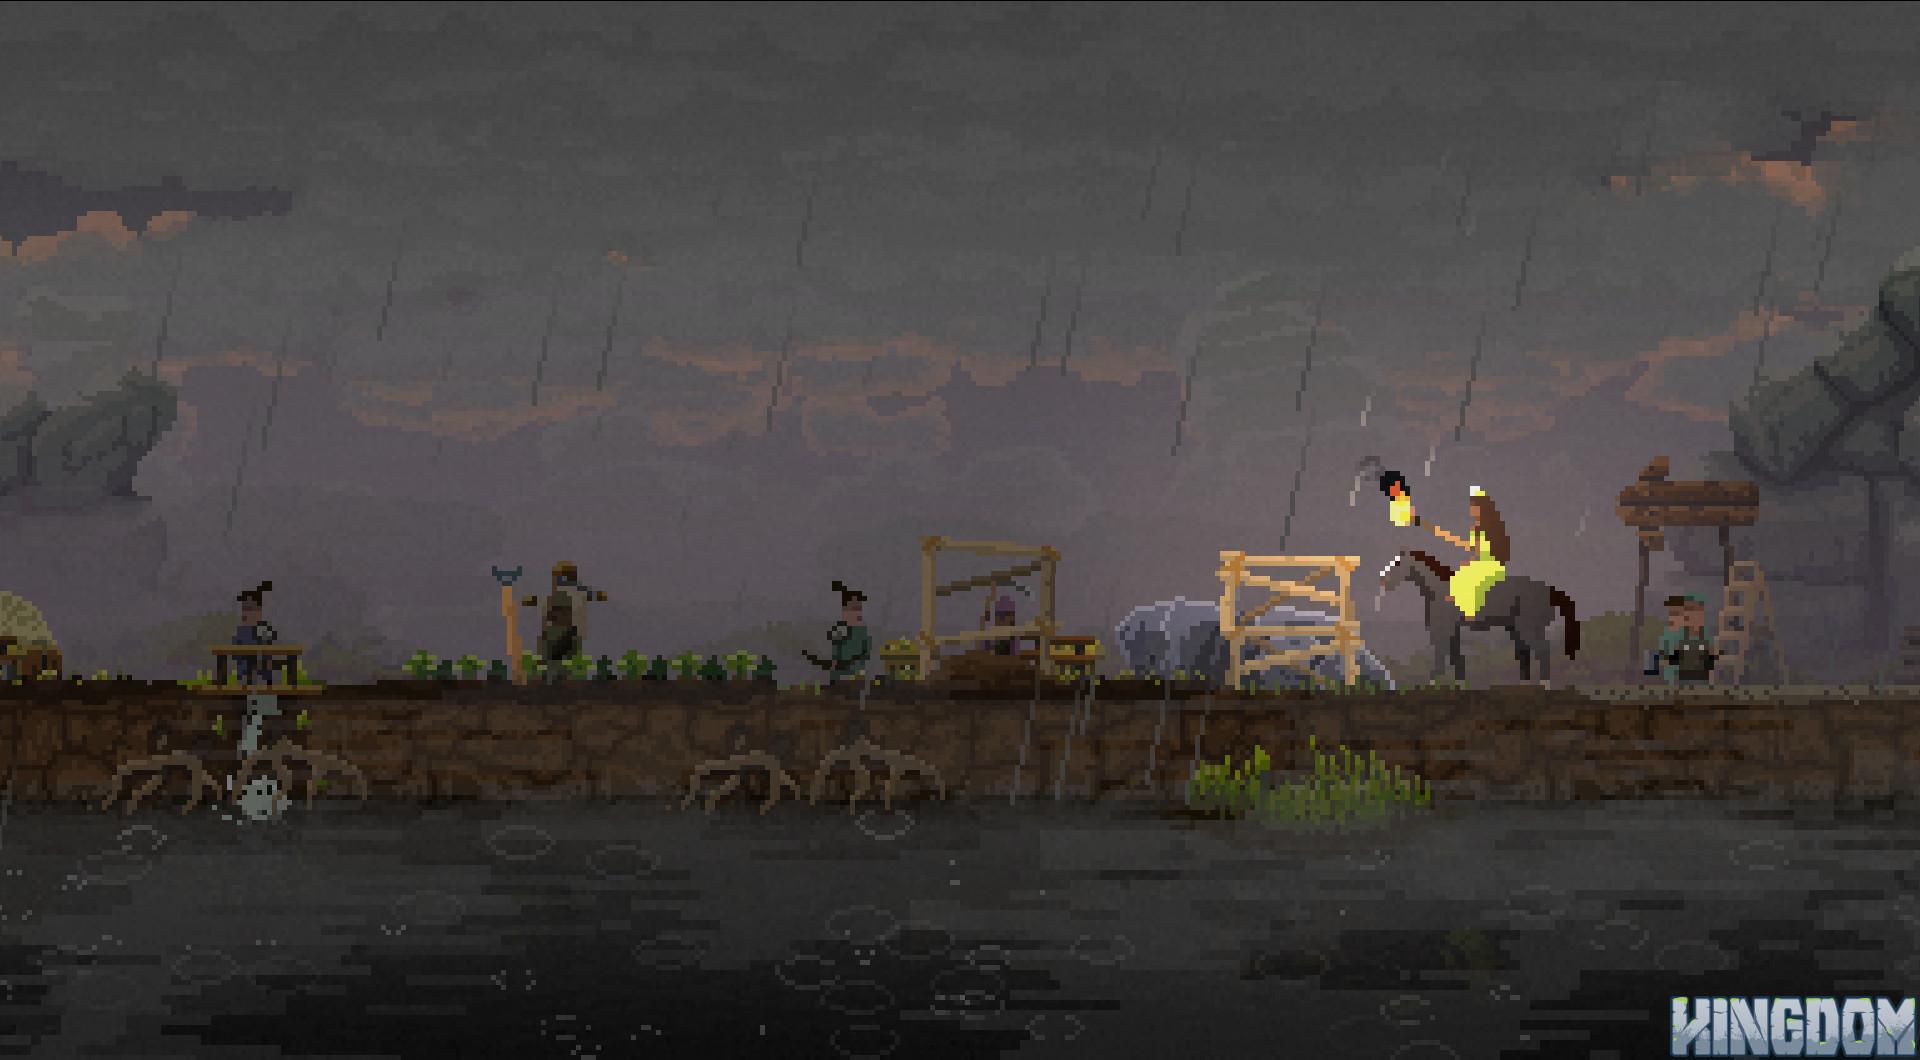 Screenshot №1 from game Kingdom: Classic